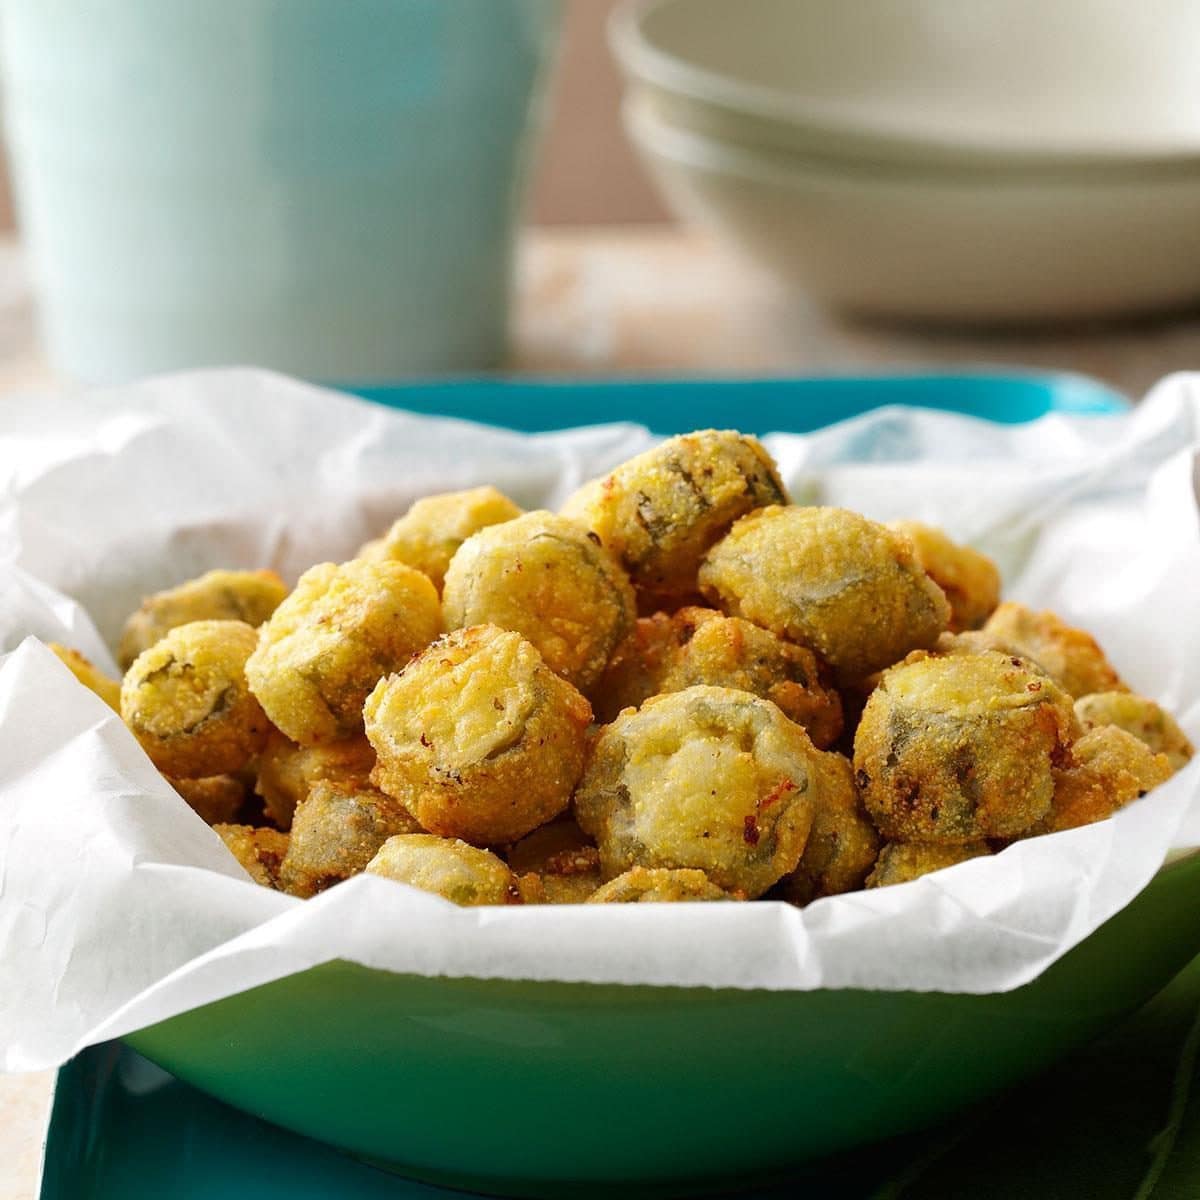 Southern fried okra recipe with garlic-herb seasoning